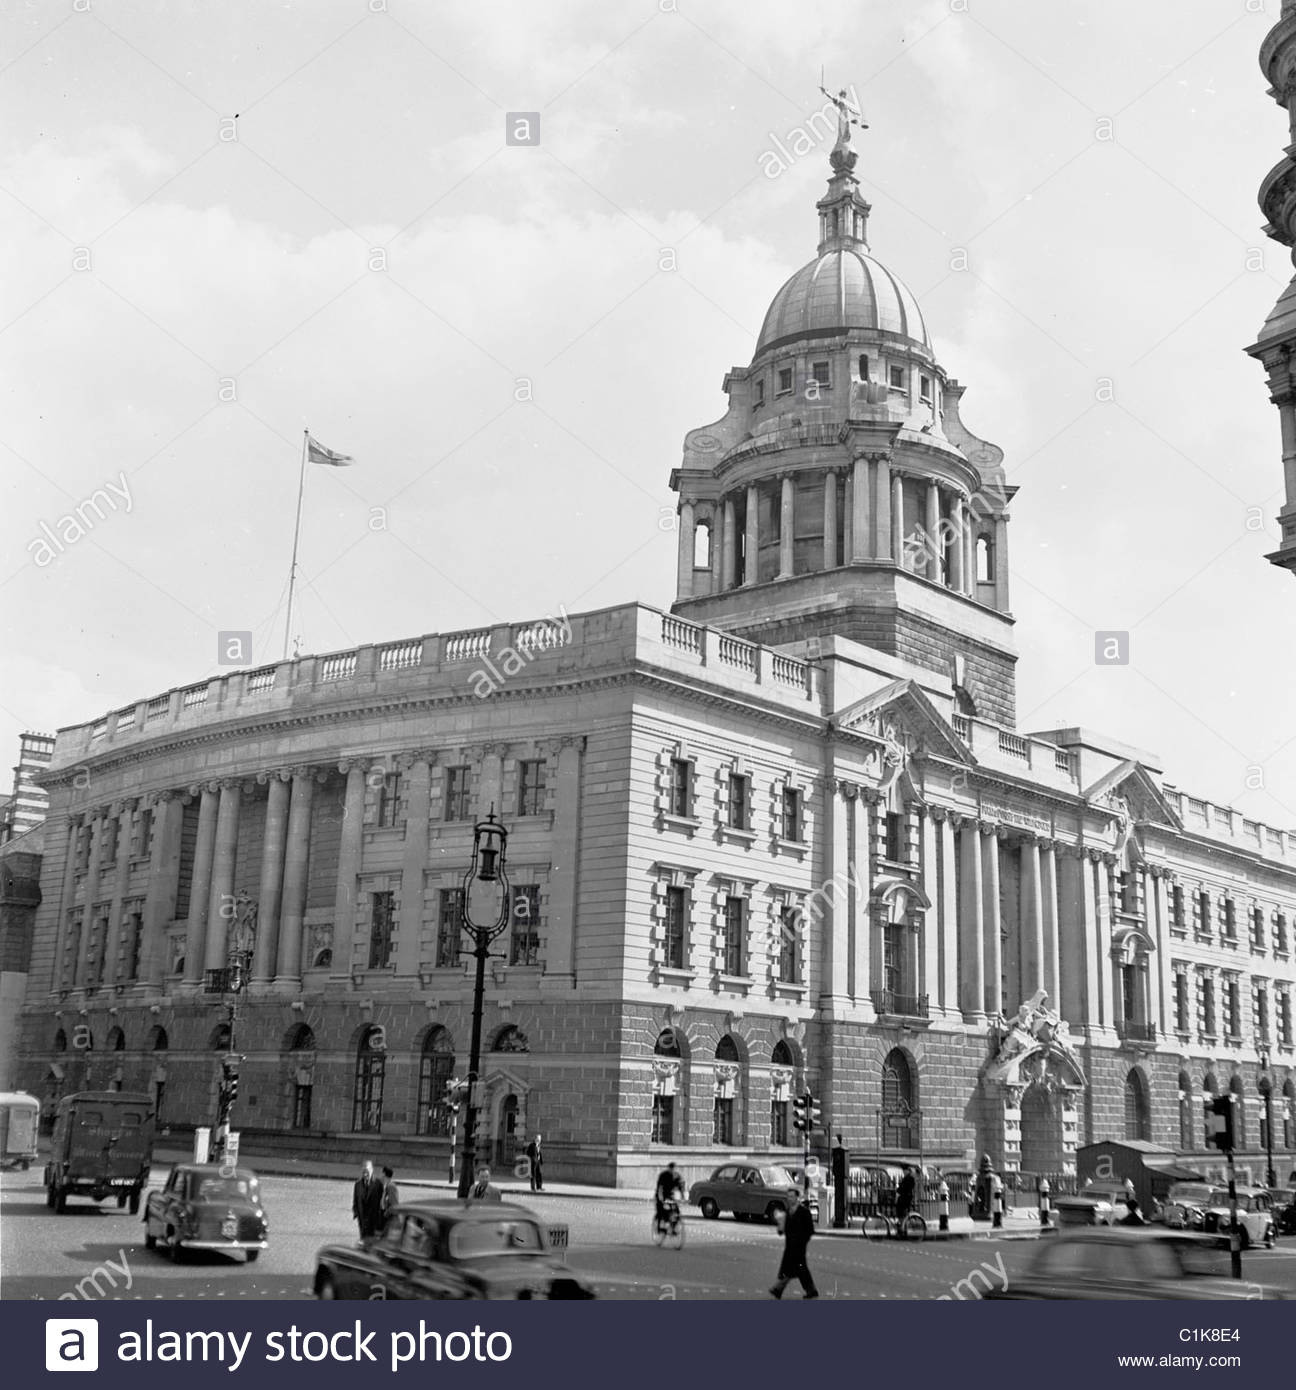 CoL 57 - AP2 - london-1950s-londons-central-criminal-court-the-old-bailey-C1K8E4.jpg